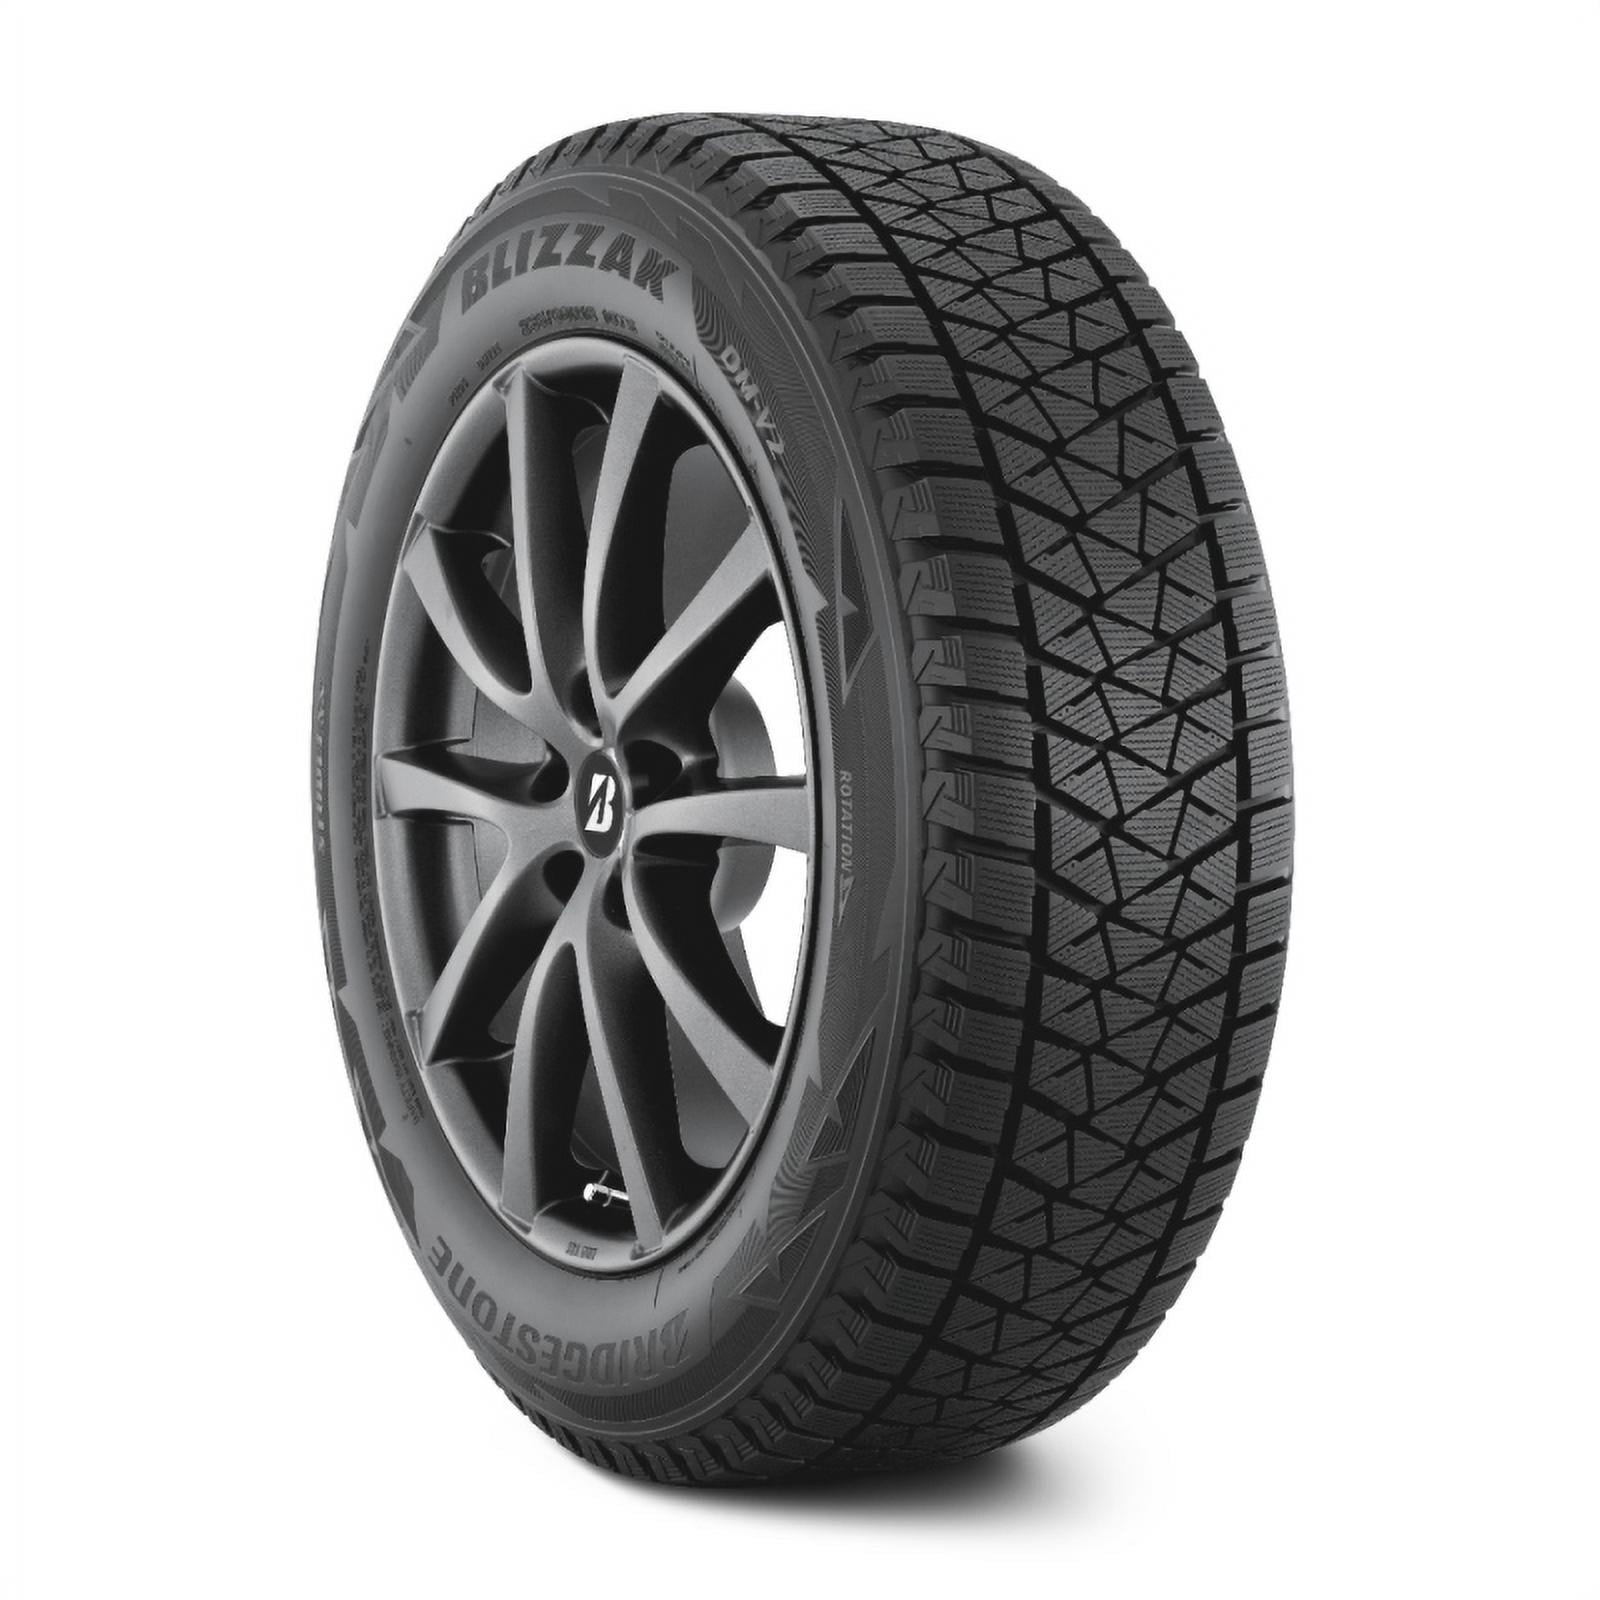 Bridgestone Blizzak DM-V2 Winter 265/60R18 110R Light Truck Tire